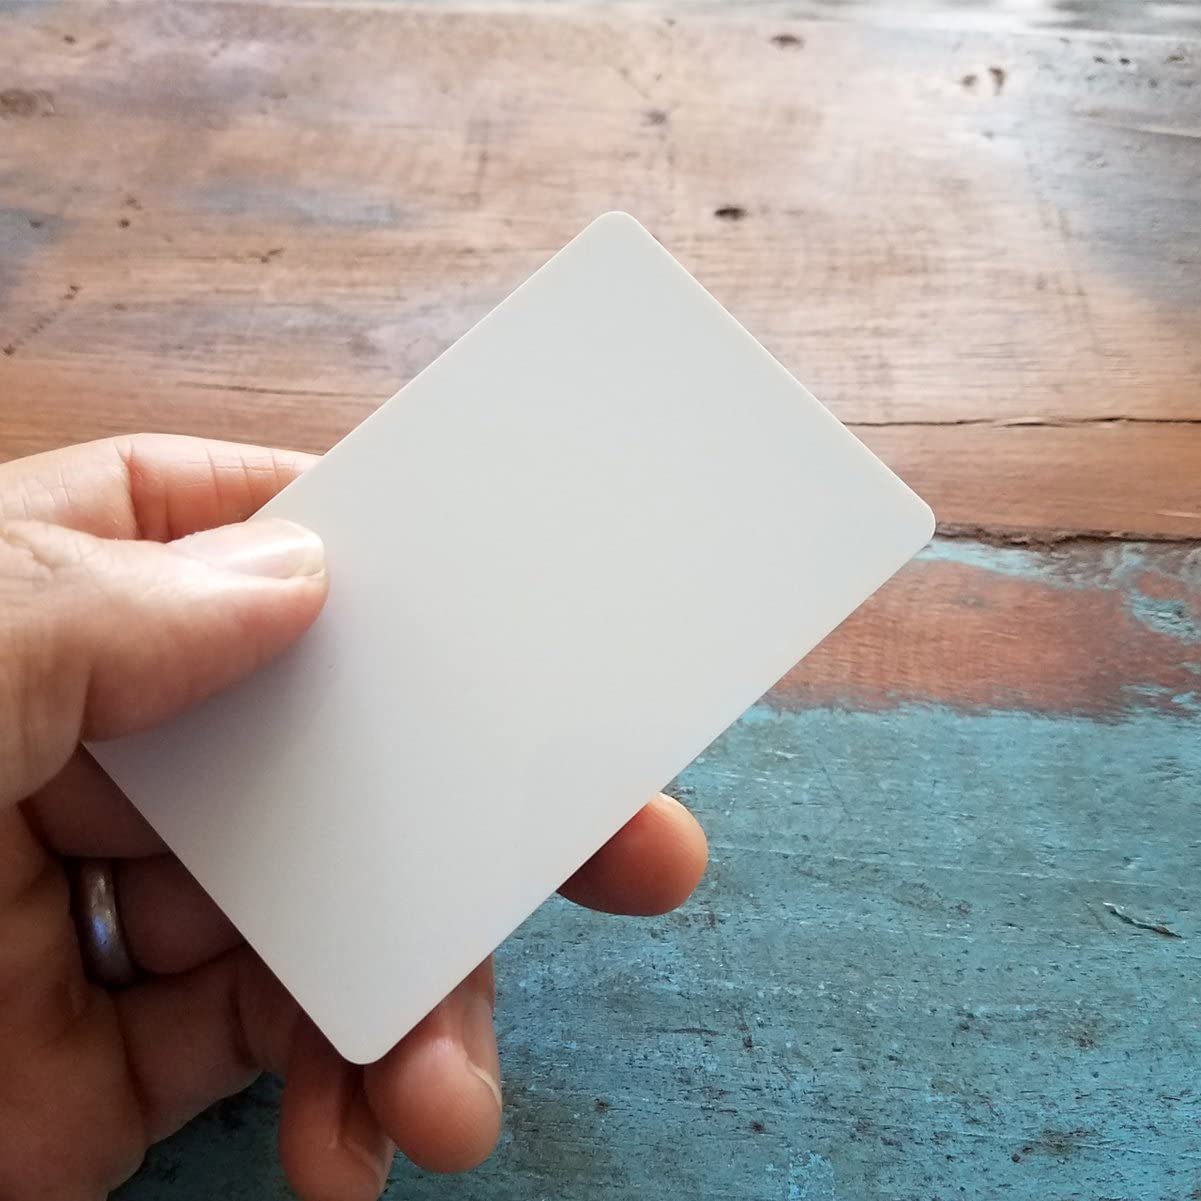 Standard CR80 30mil  (80/30) Blank White PVC Cards (Box of 500)